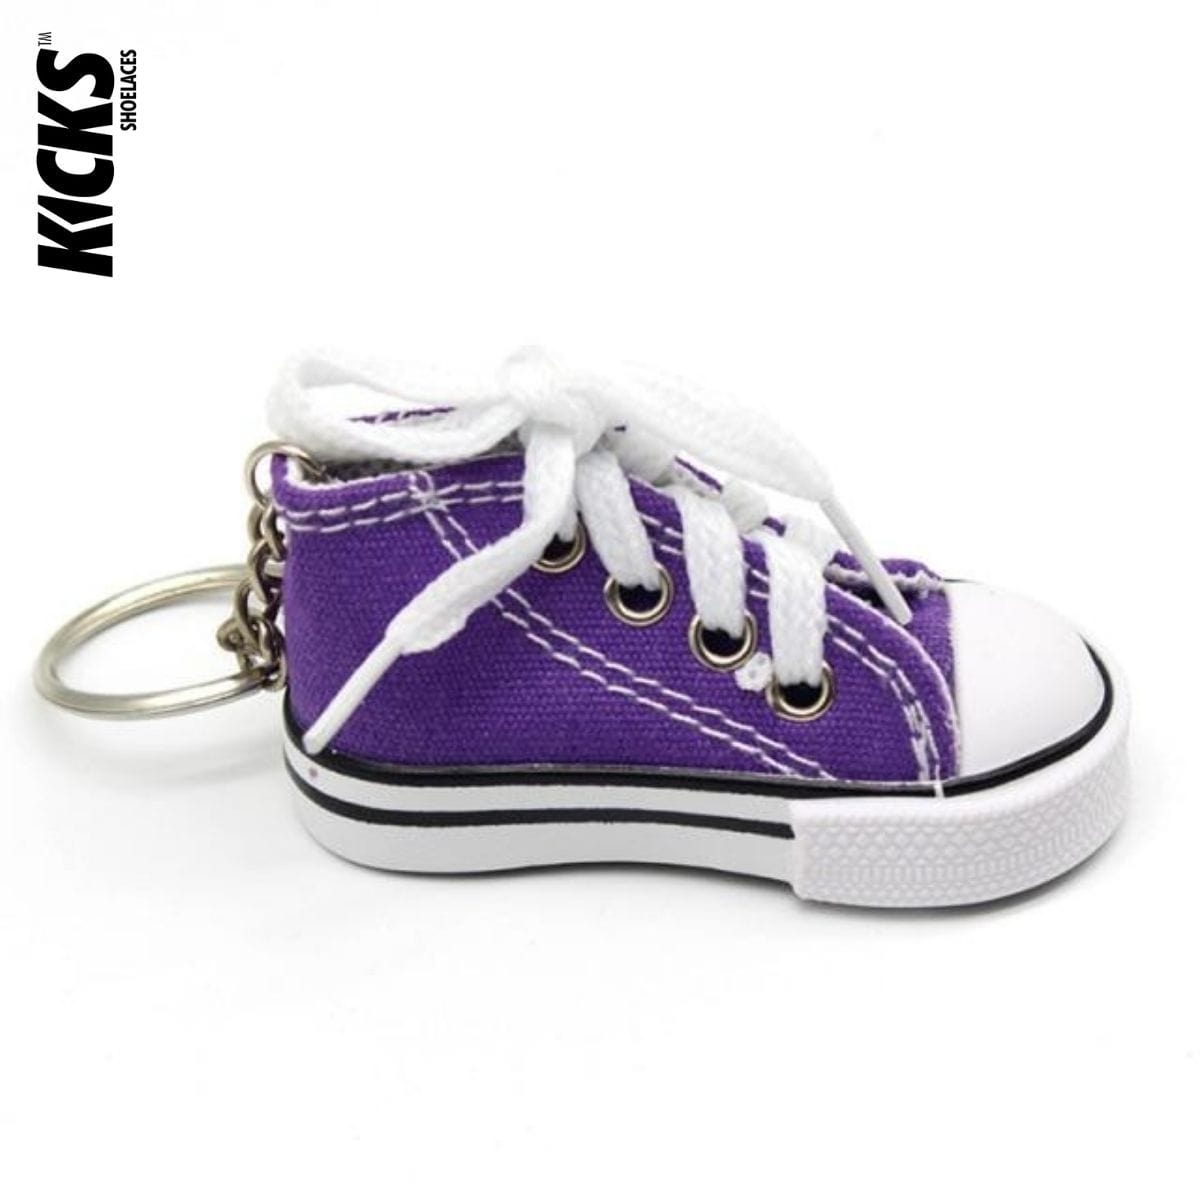 purple-high-top-sneaker-keychain-perfect-gift-best-charm-accessories.jpg